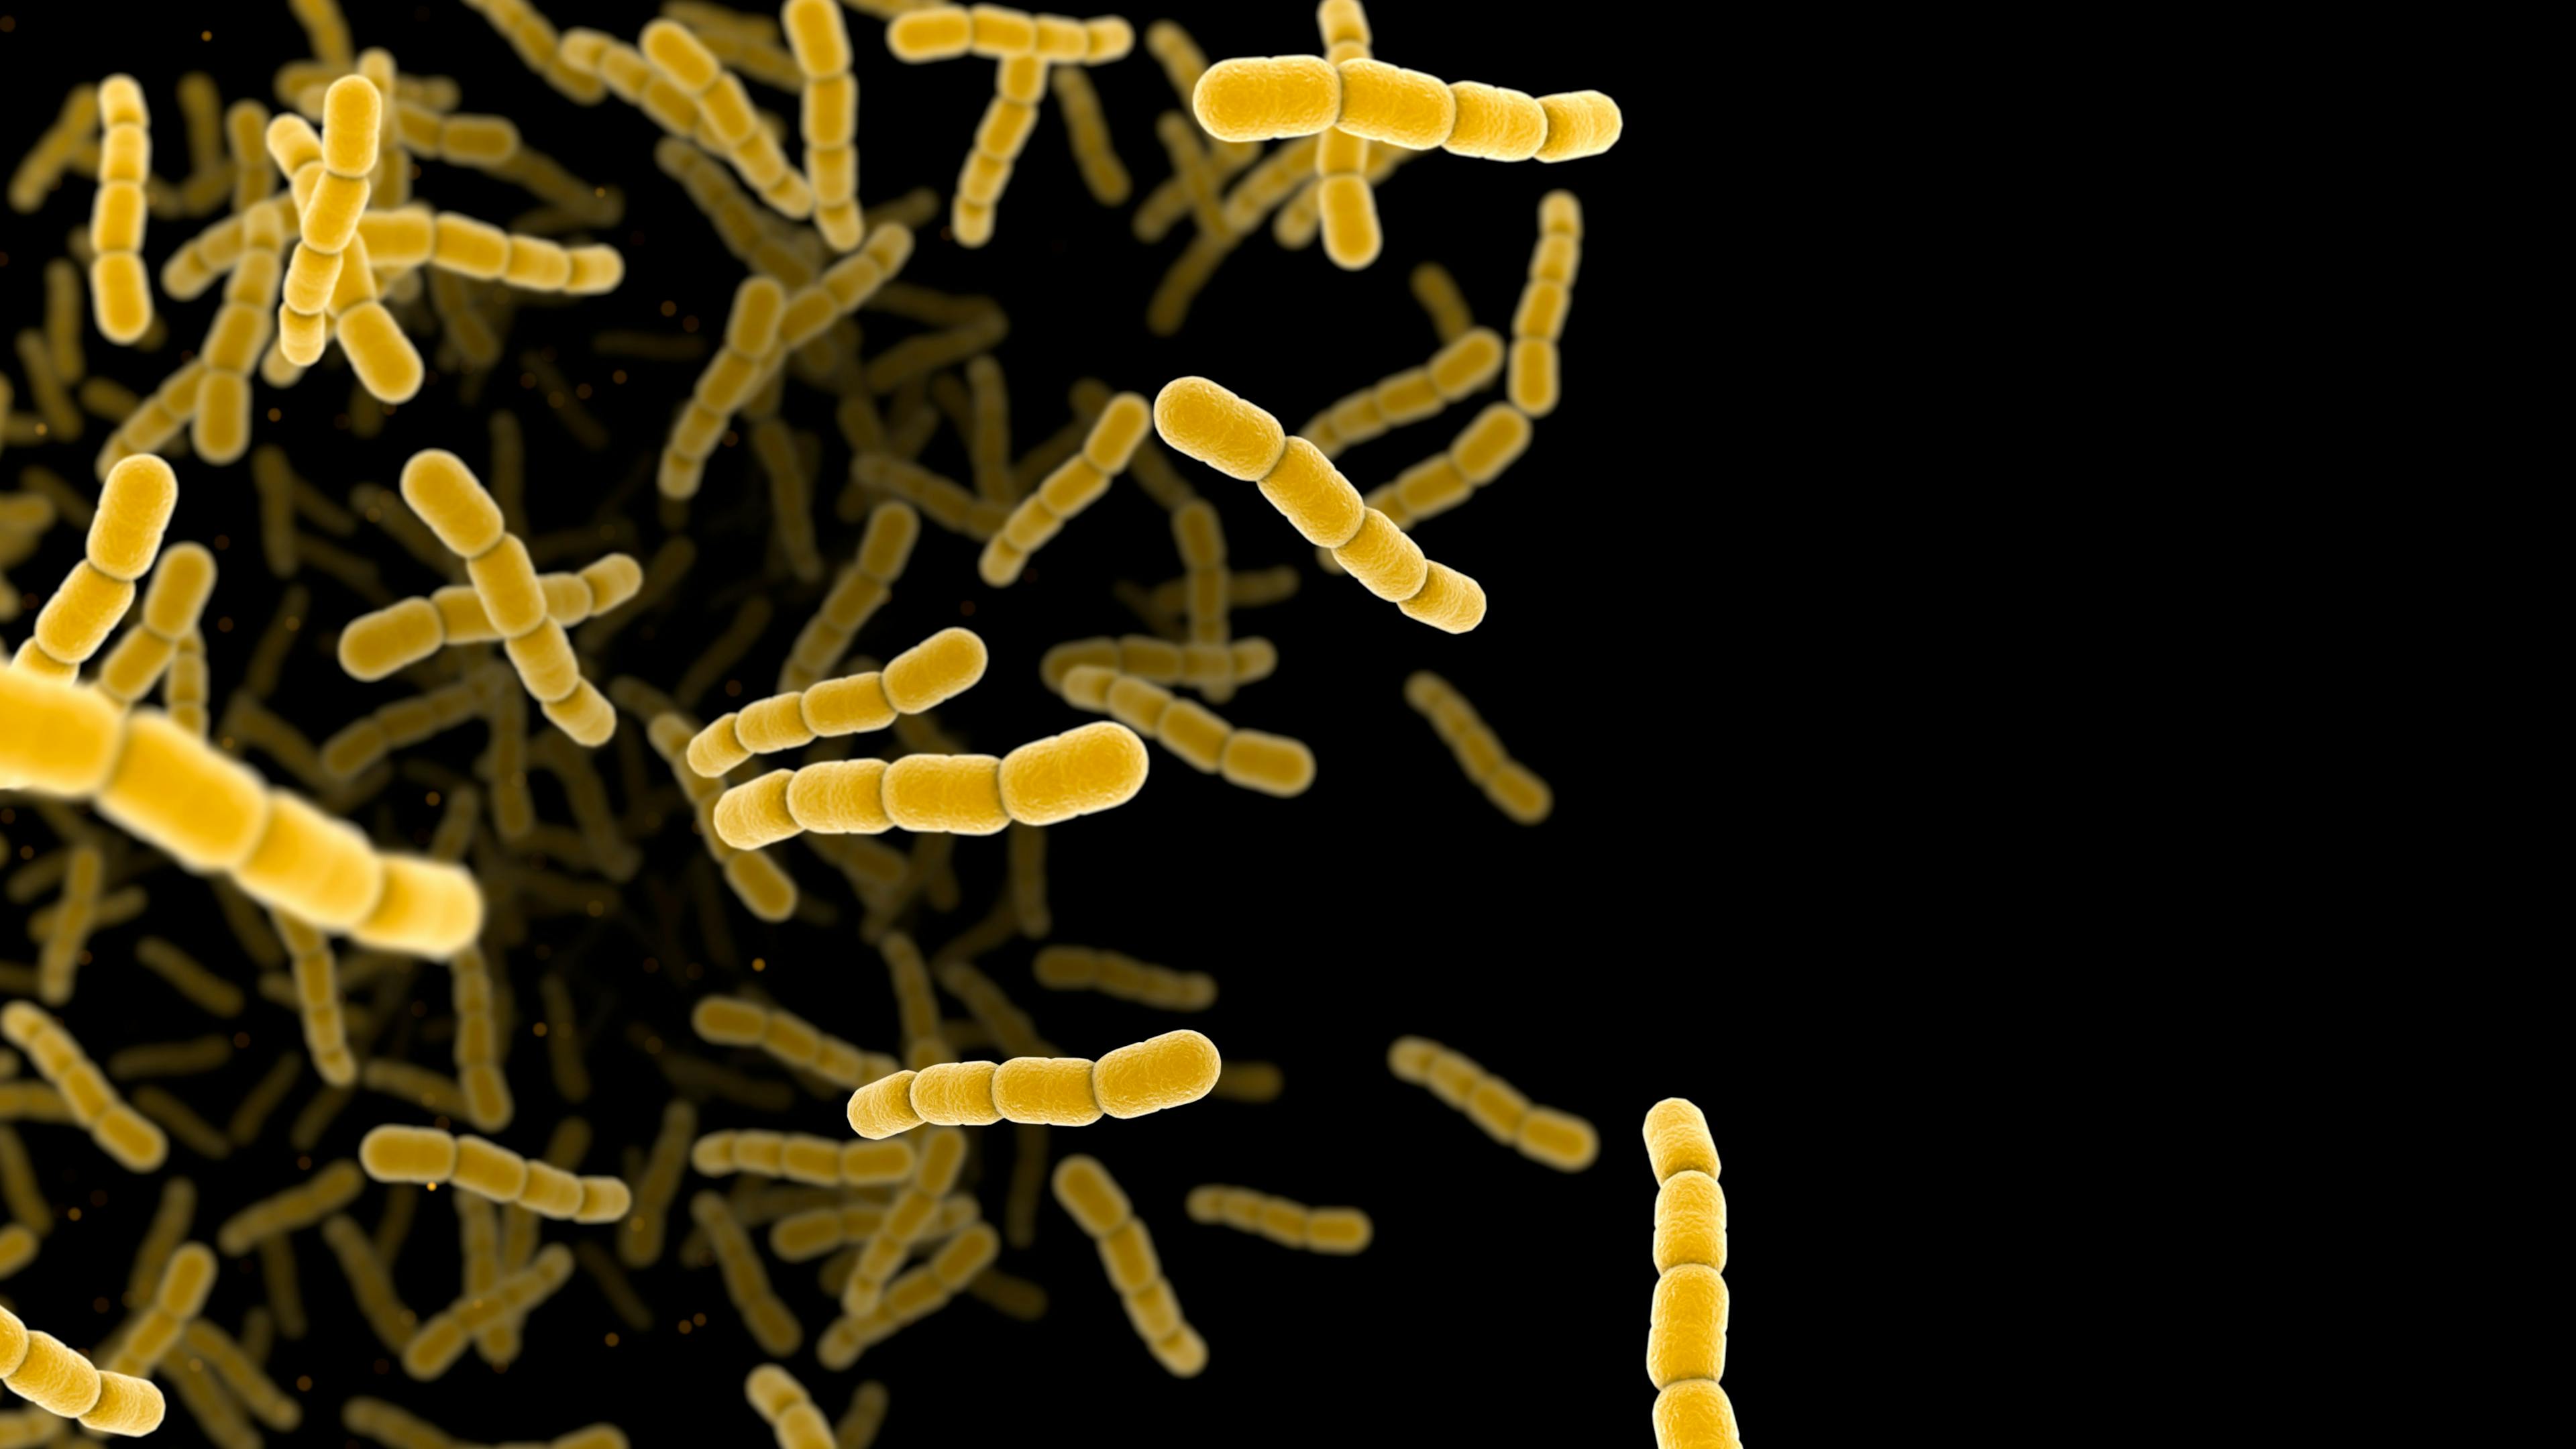 Streptococcus pneumonia bacteria cells | Image Credit: Jezper - stock.adobe.com